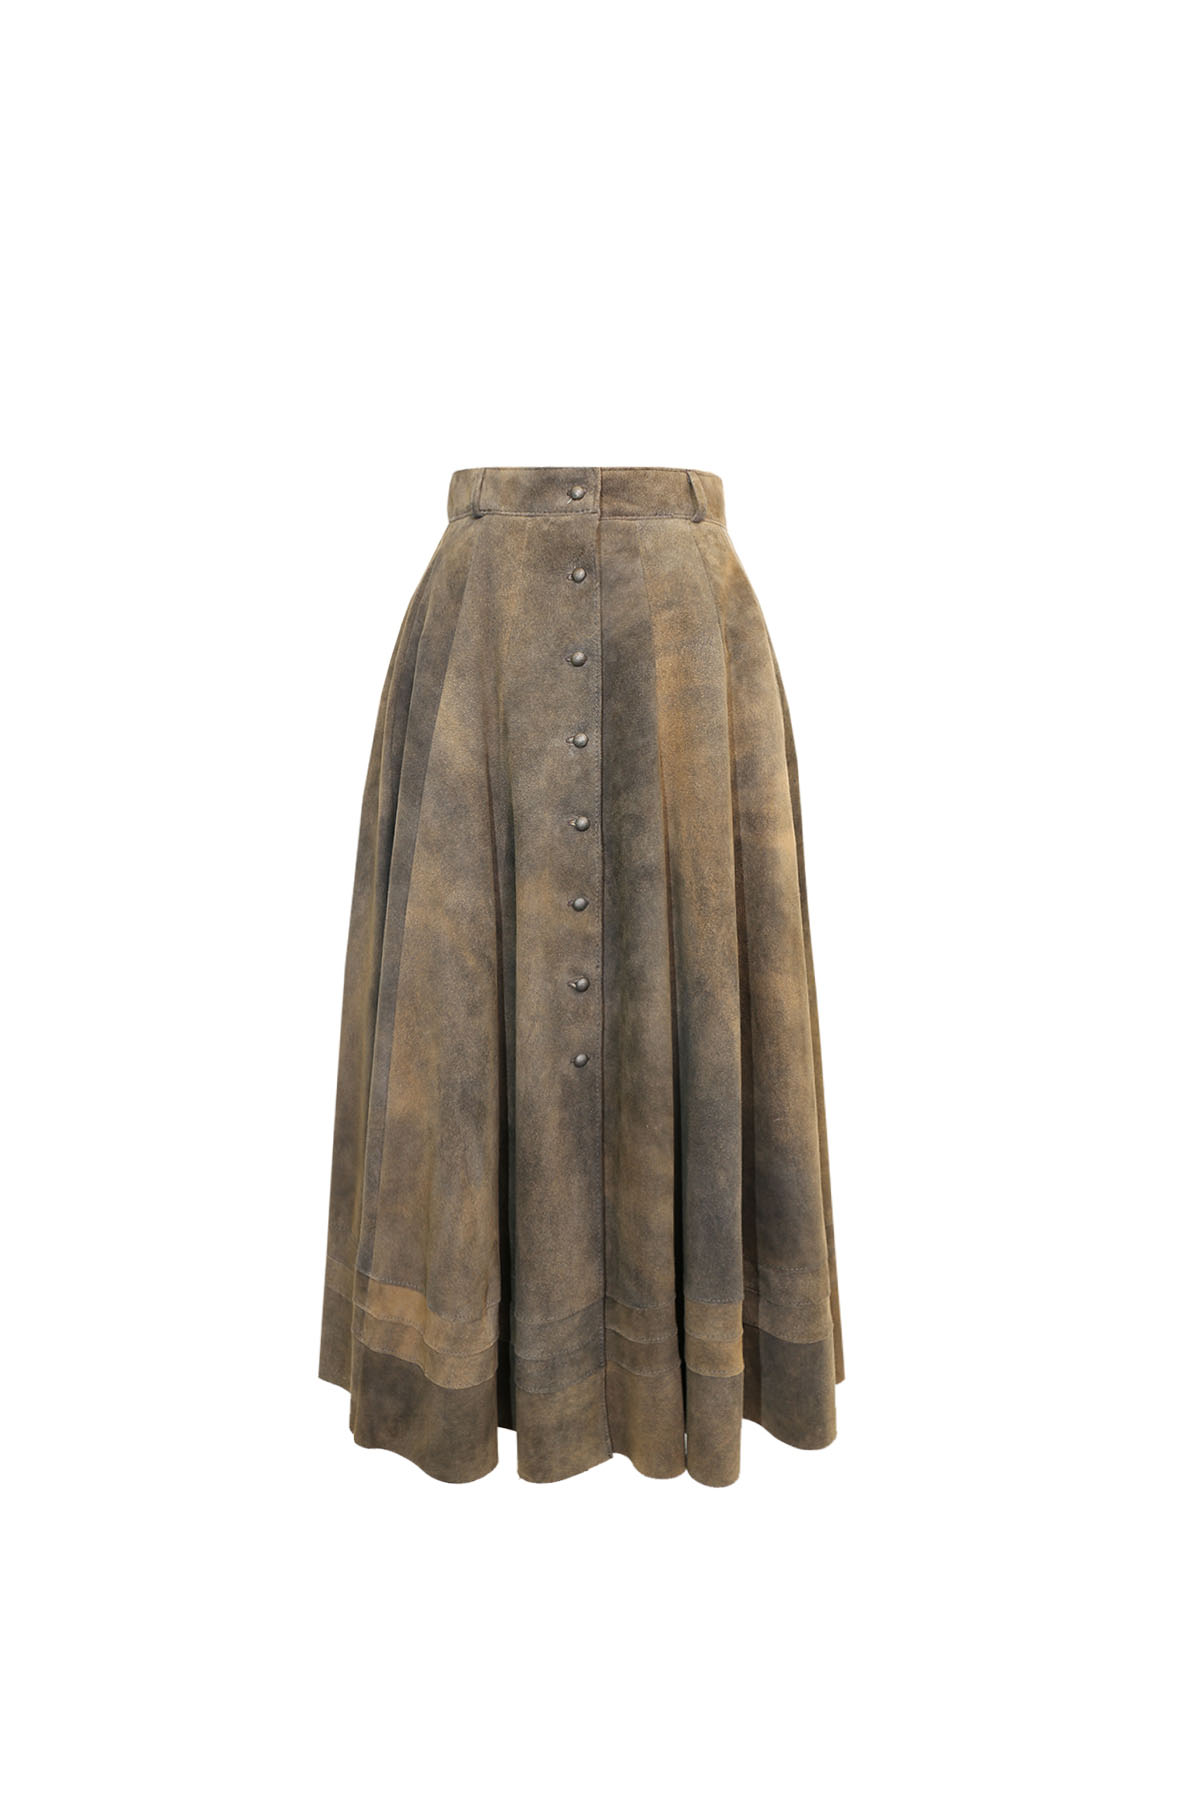 Goat Leather Skirt “Daisy”, kabok